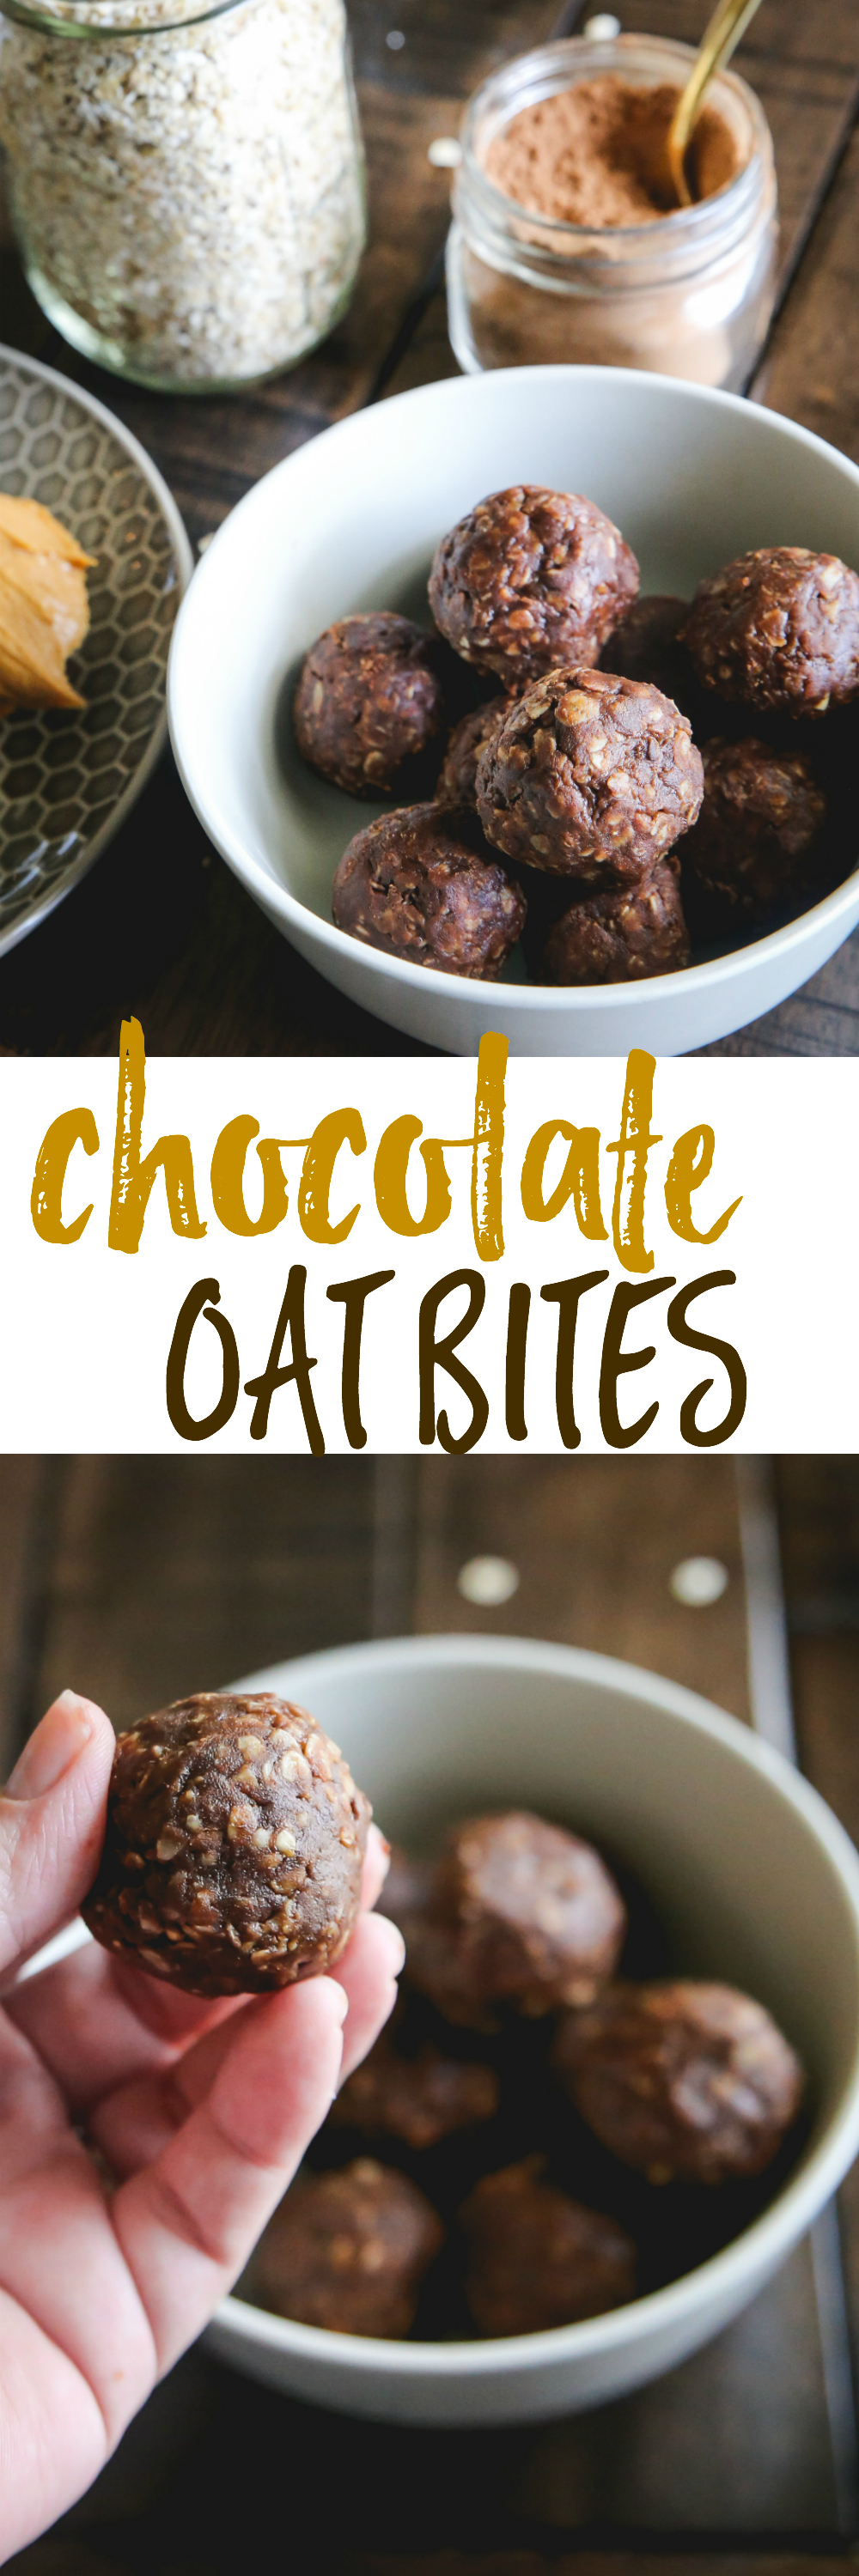 chocolate oat bites